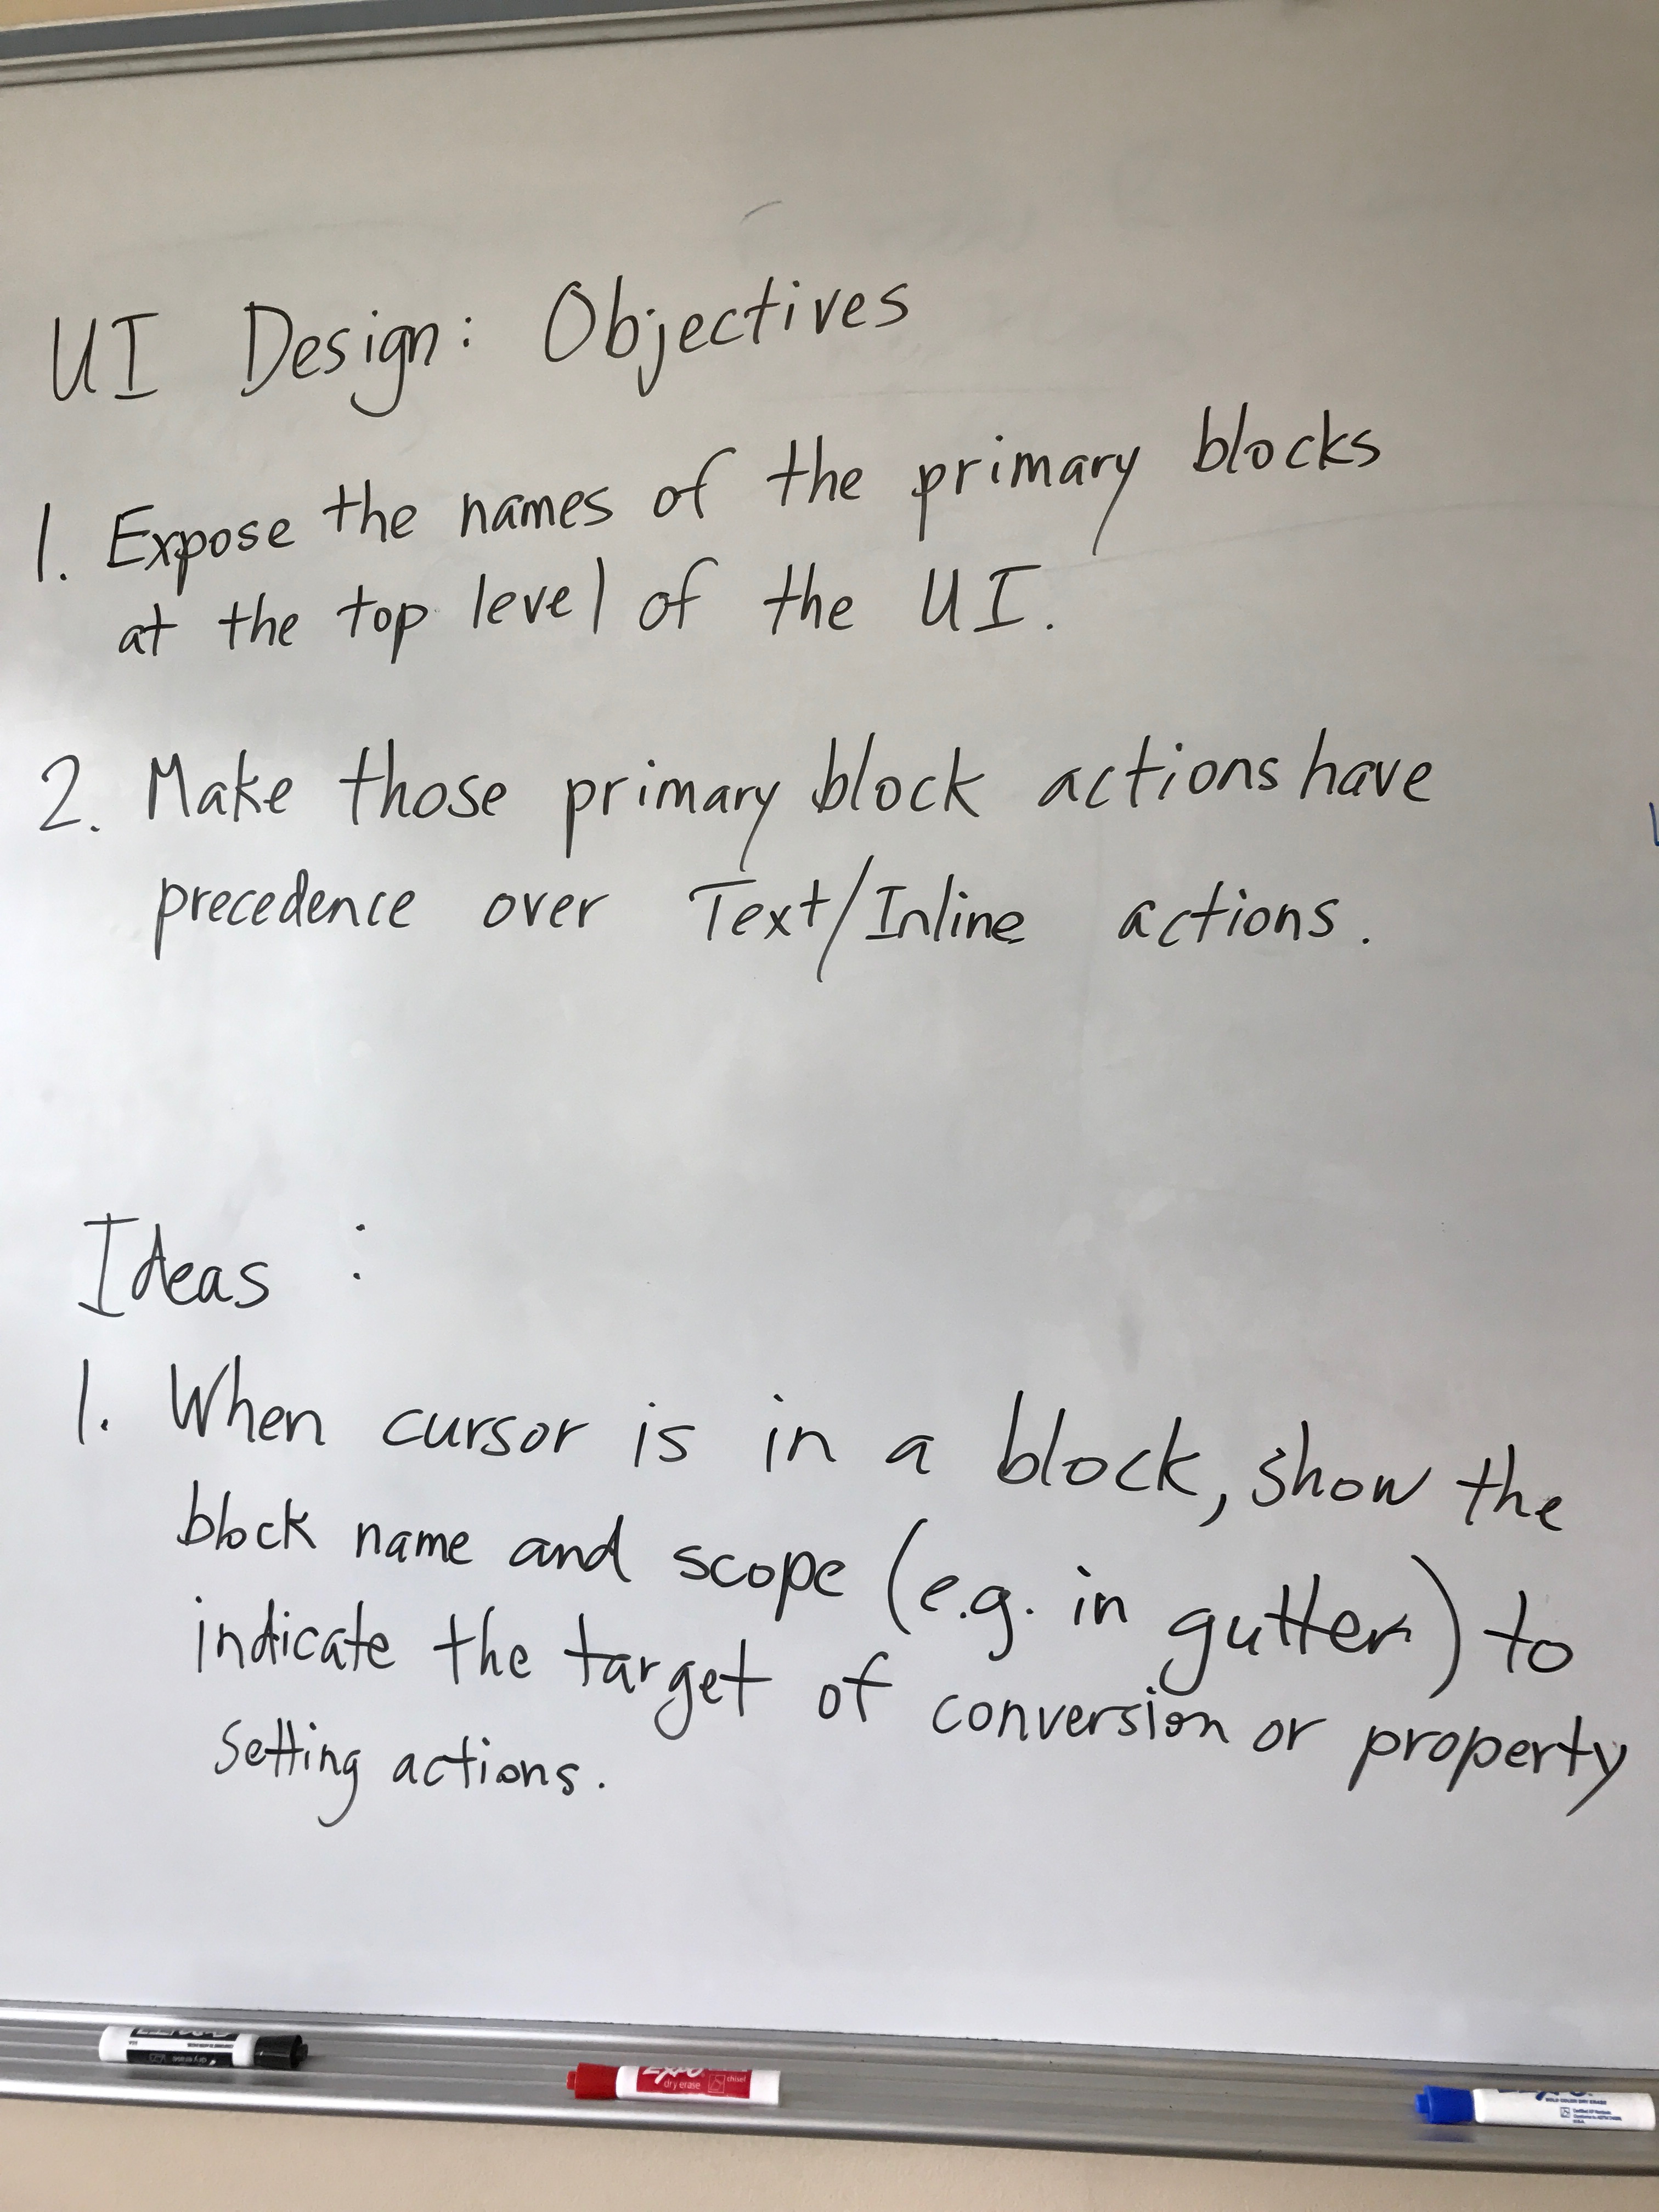 UI objectives